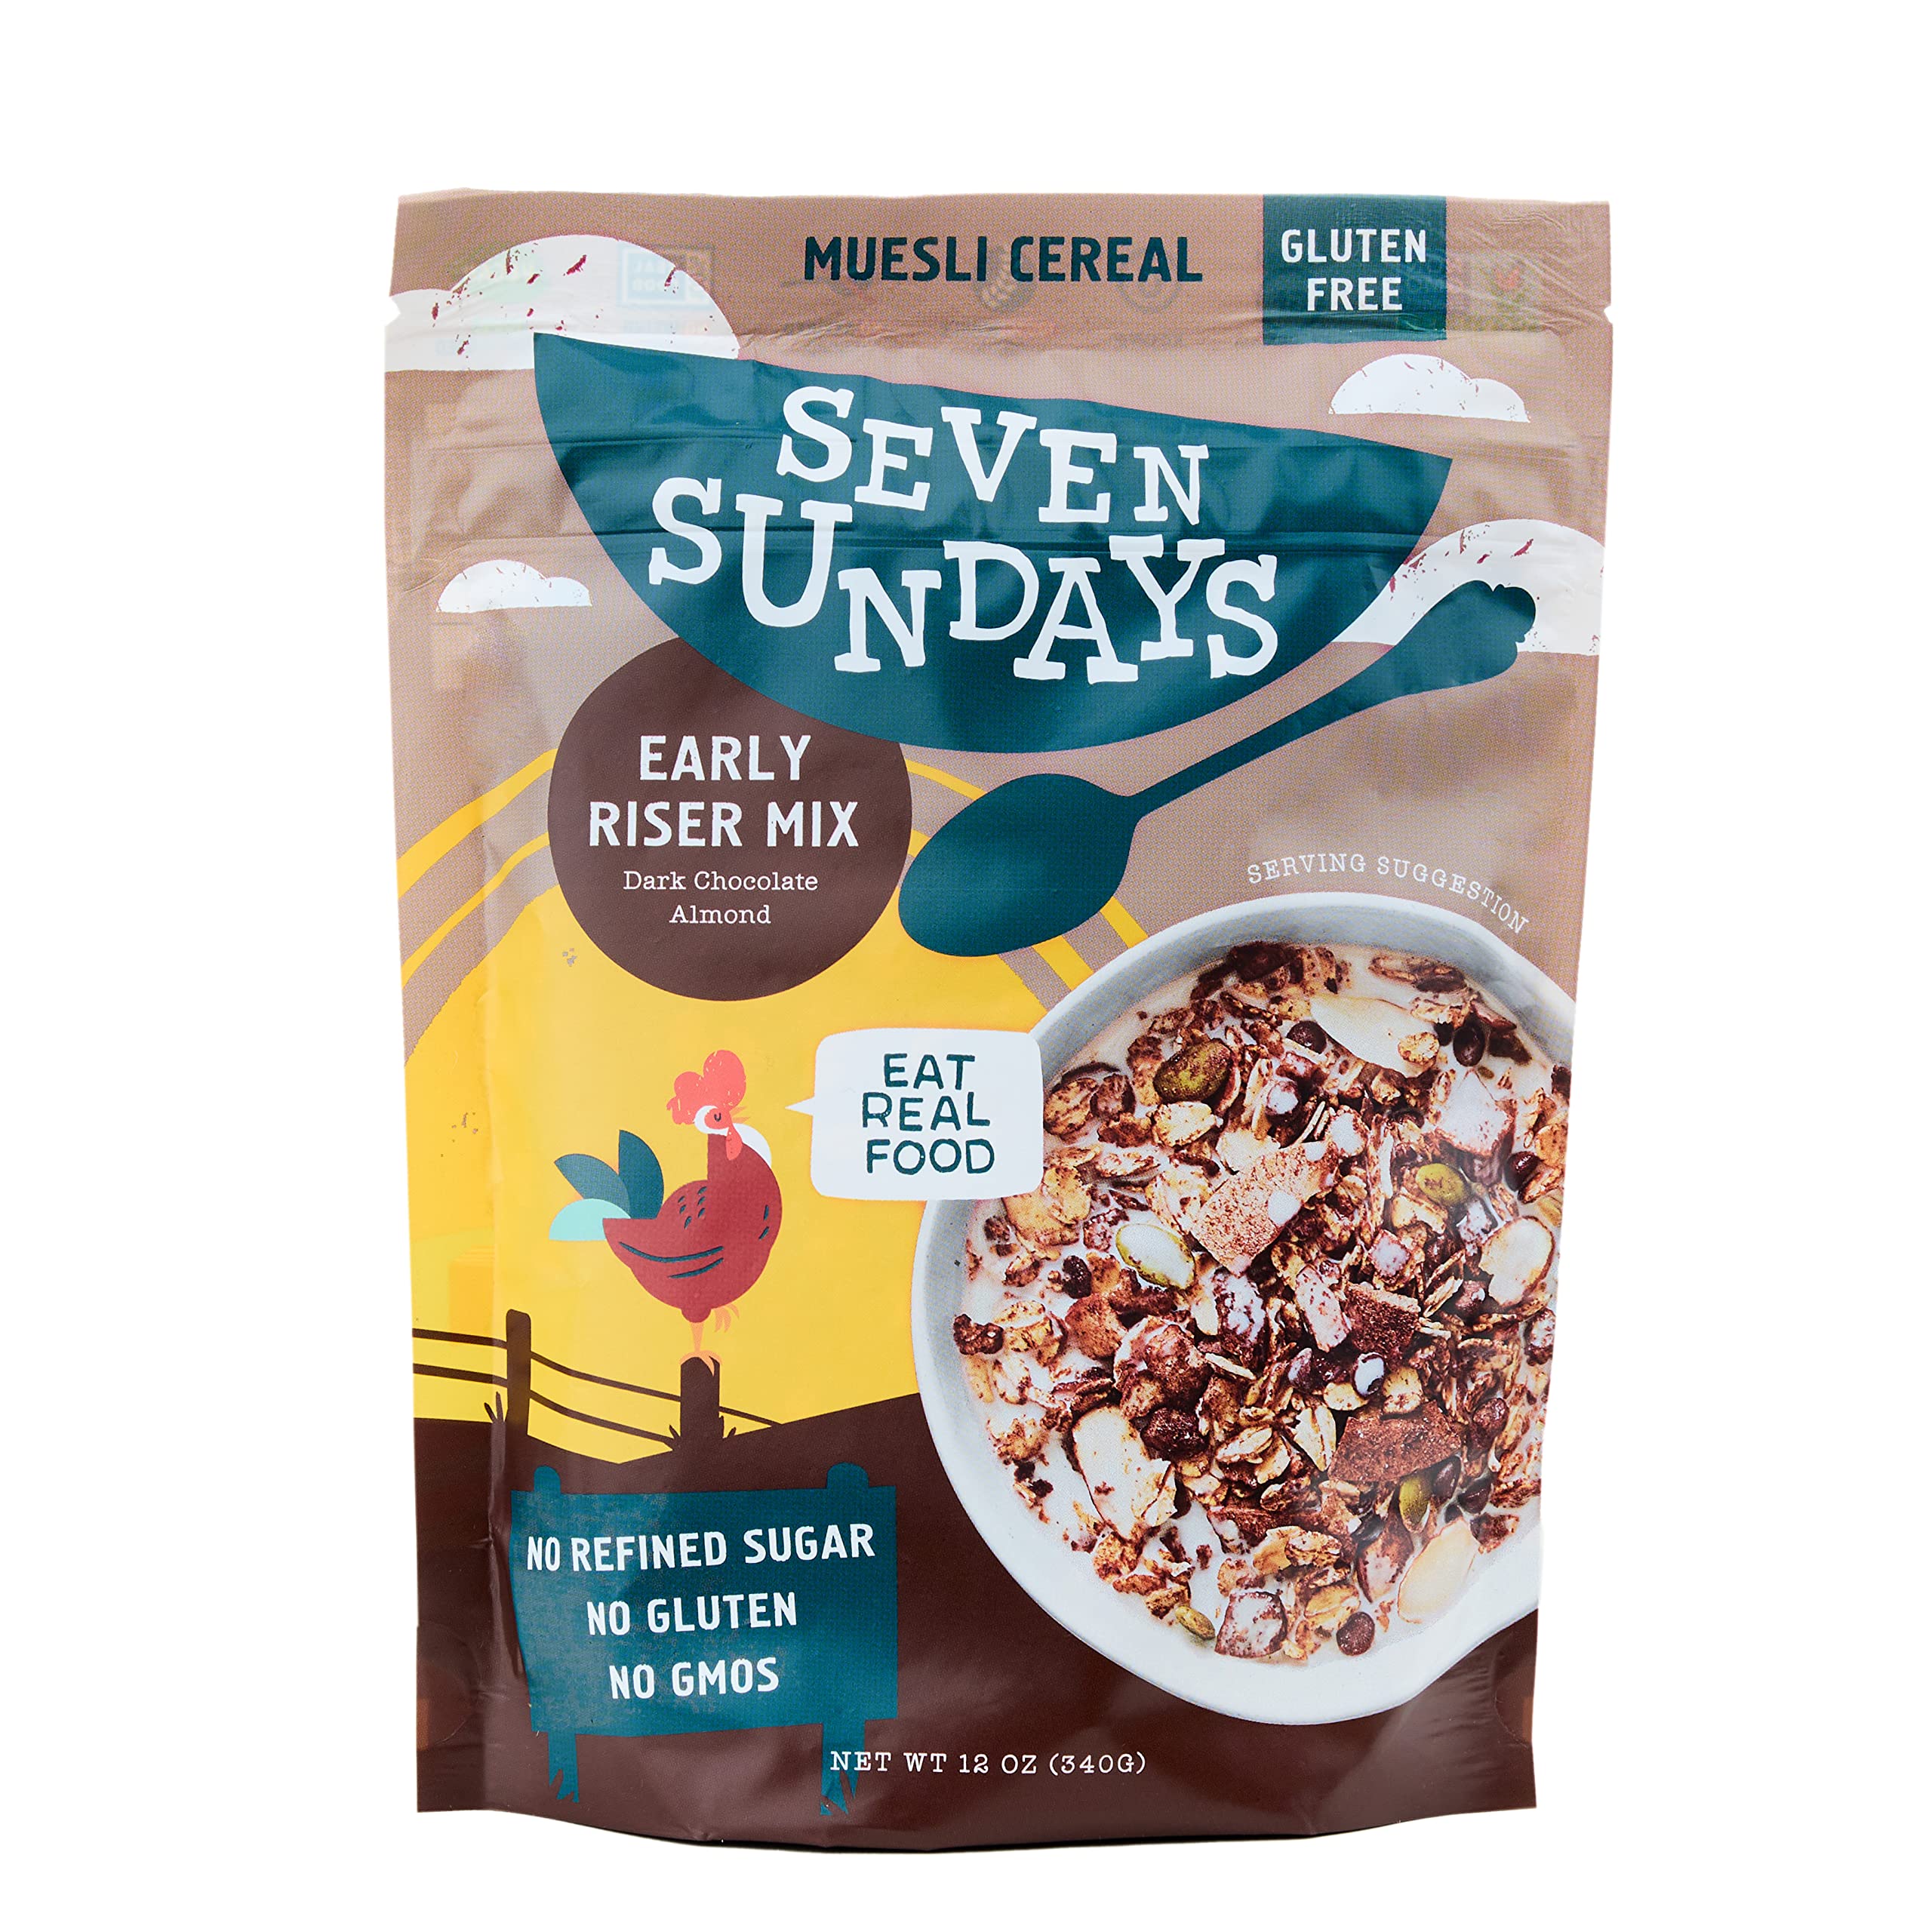 Seven Sundays Early Riser Dark Chocolate Muesli Cereal - 12 Oz Pouch - Certified Gluten Free Muesli - Non GMO, No Refined Sugar and Kosher